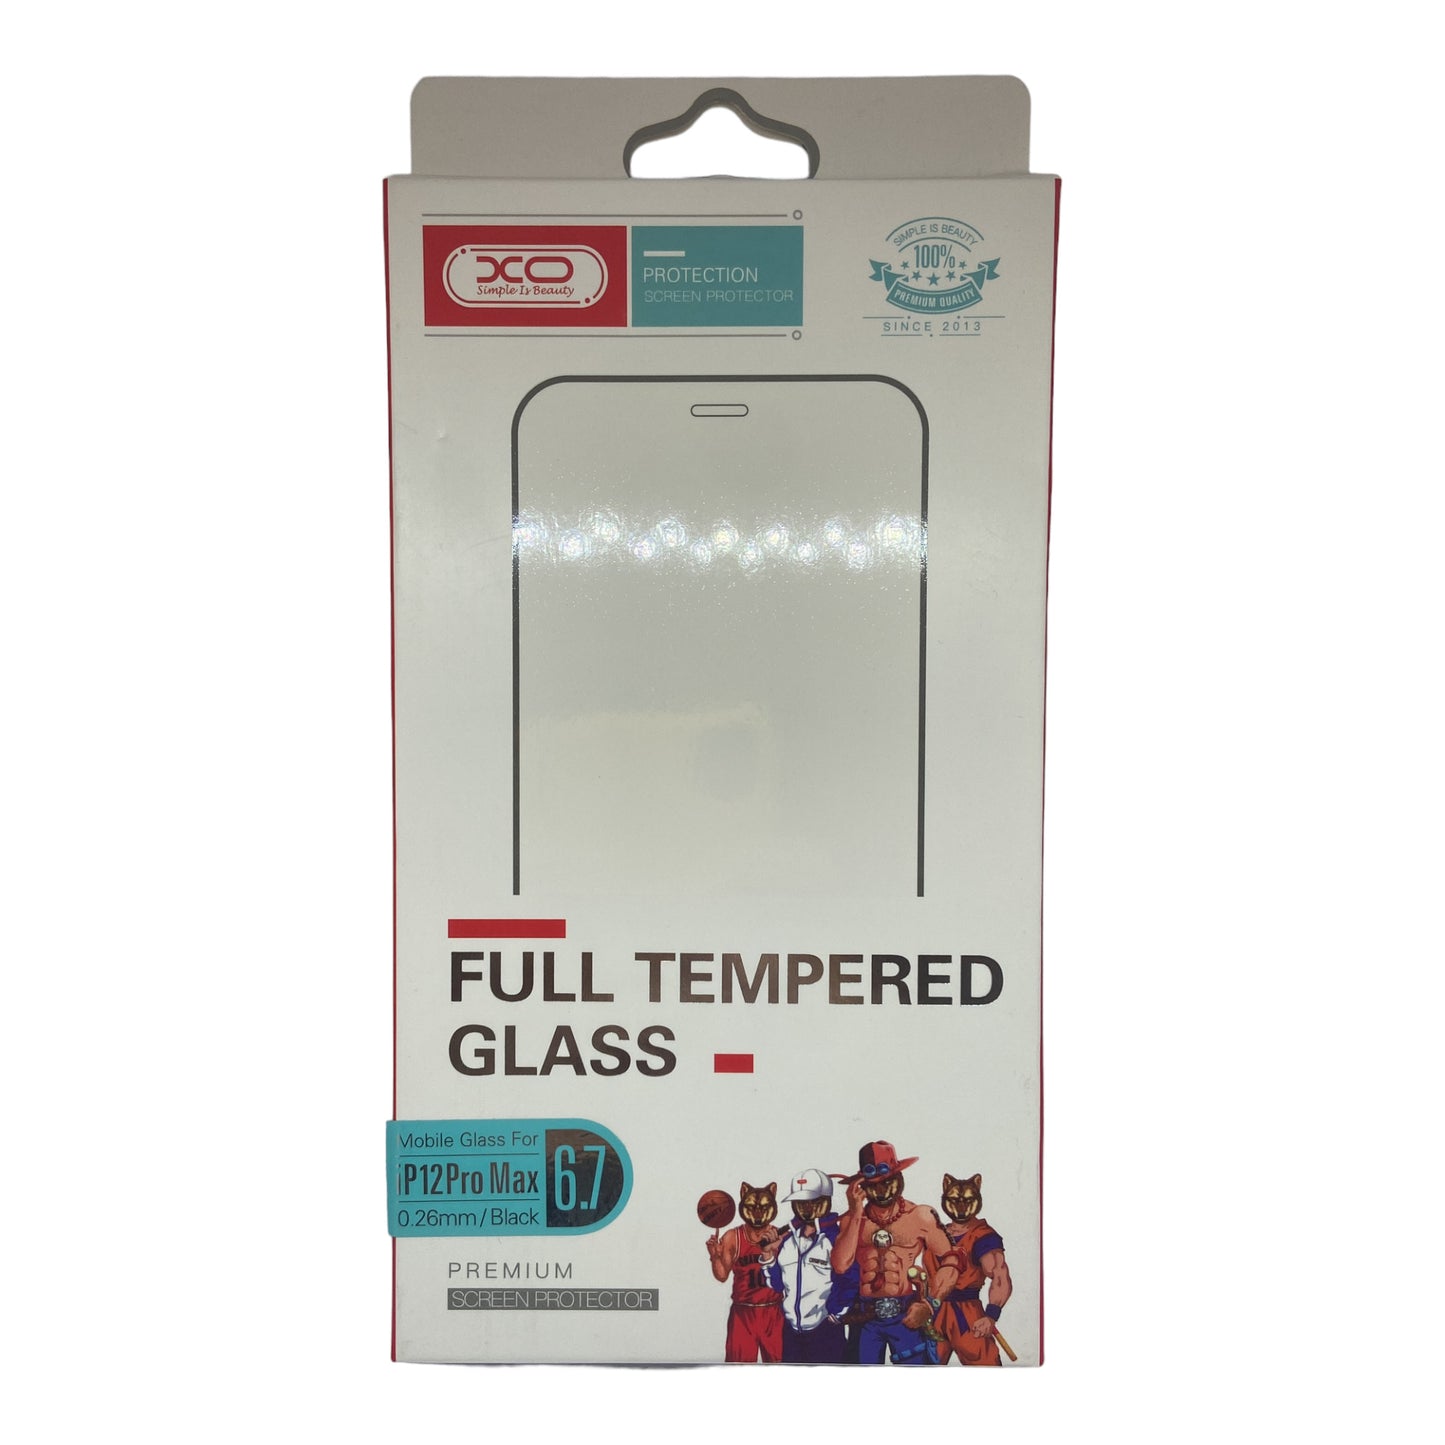 XO iPhone tempered glass screen protector- لزقة حماية شاشة للايفون ماركة XO